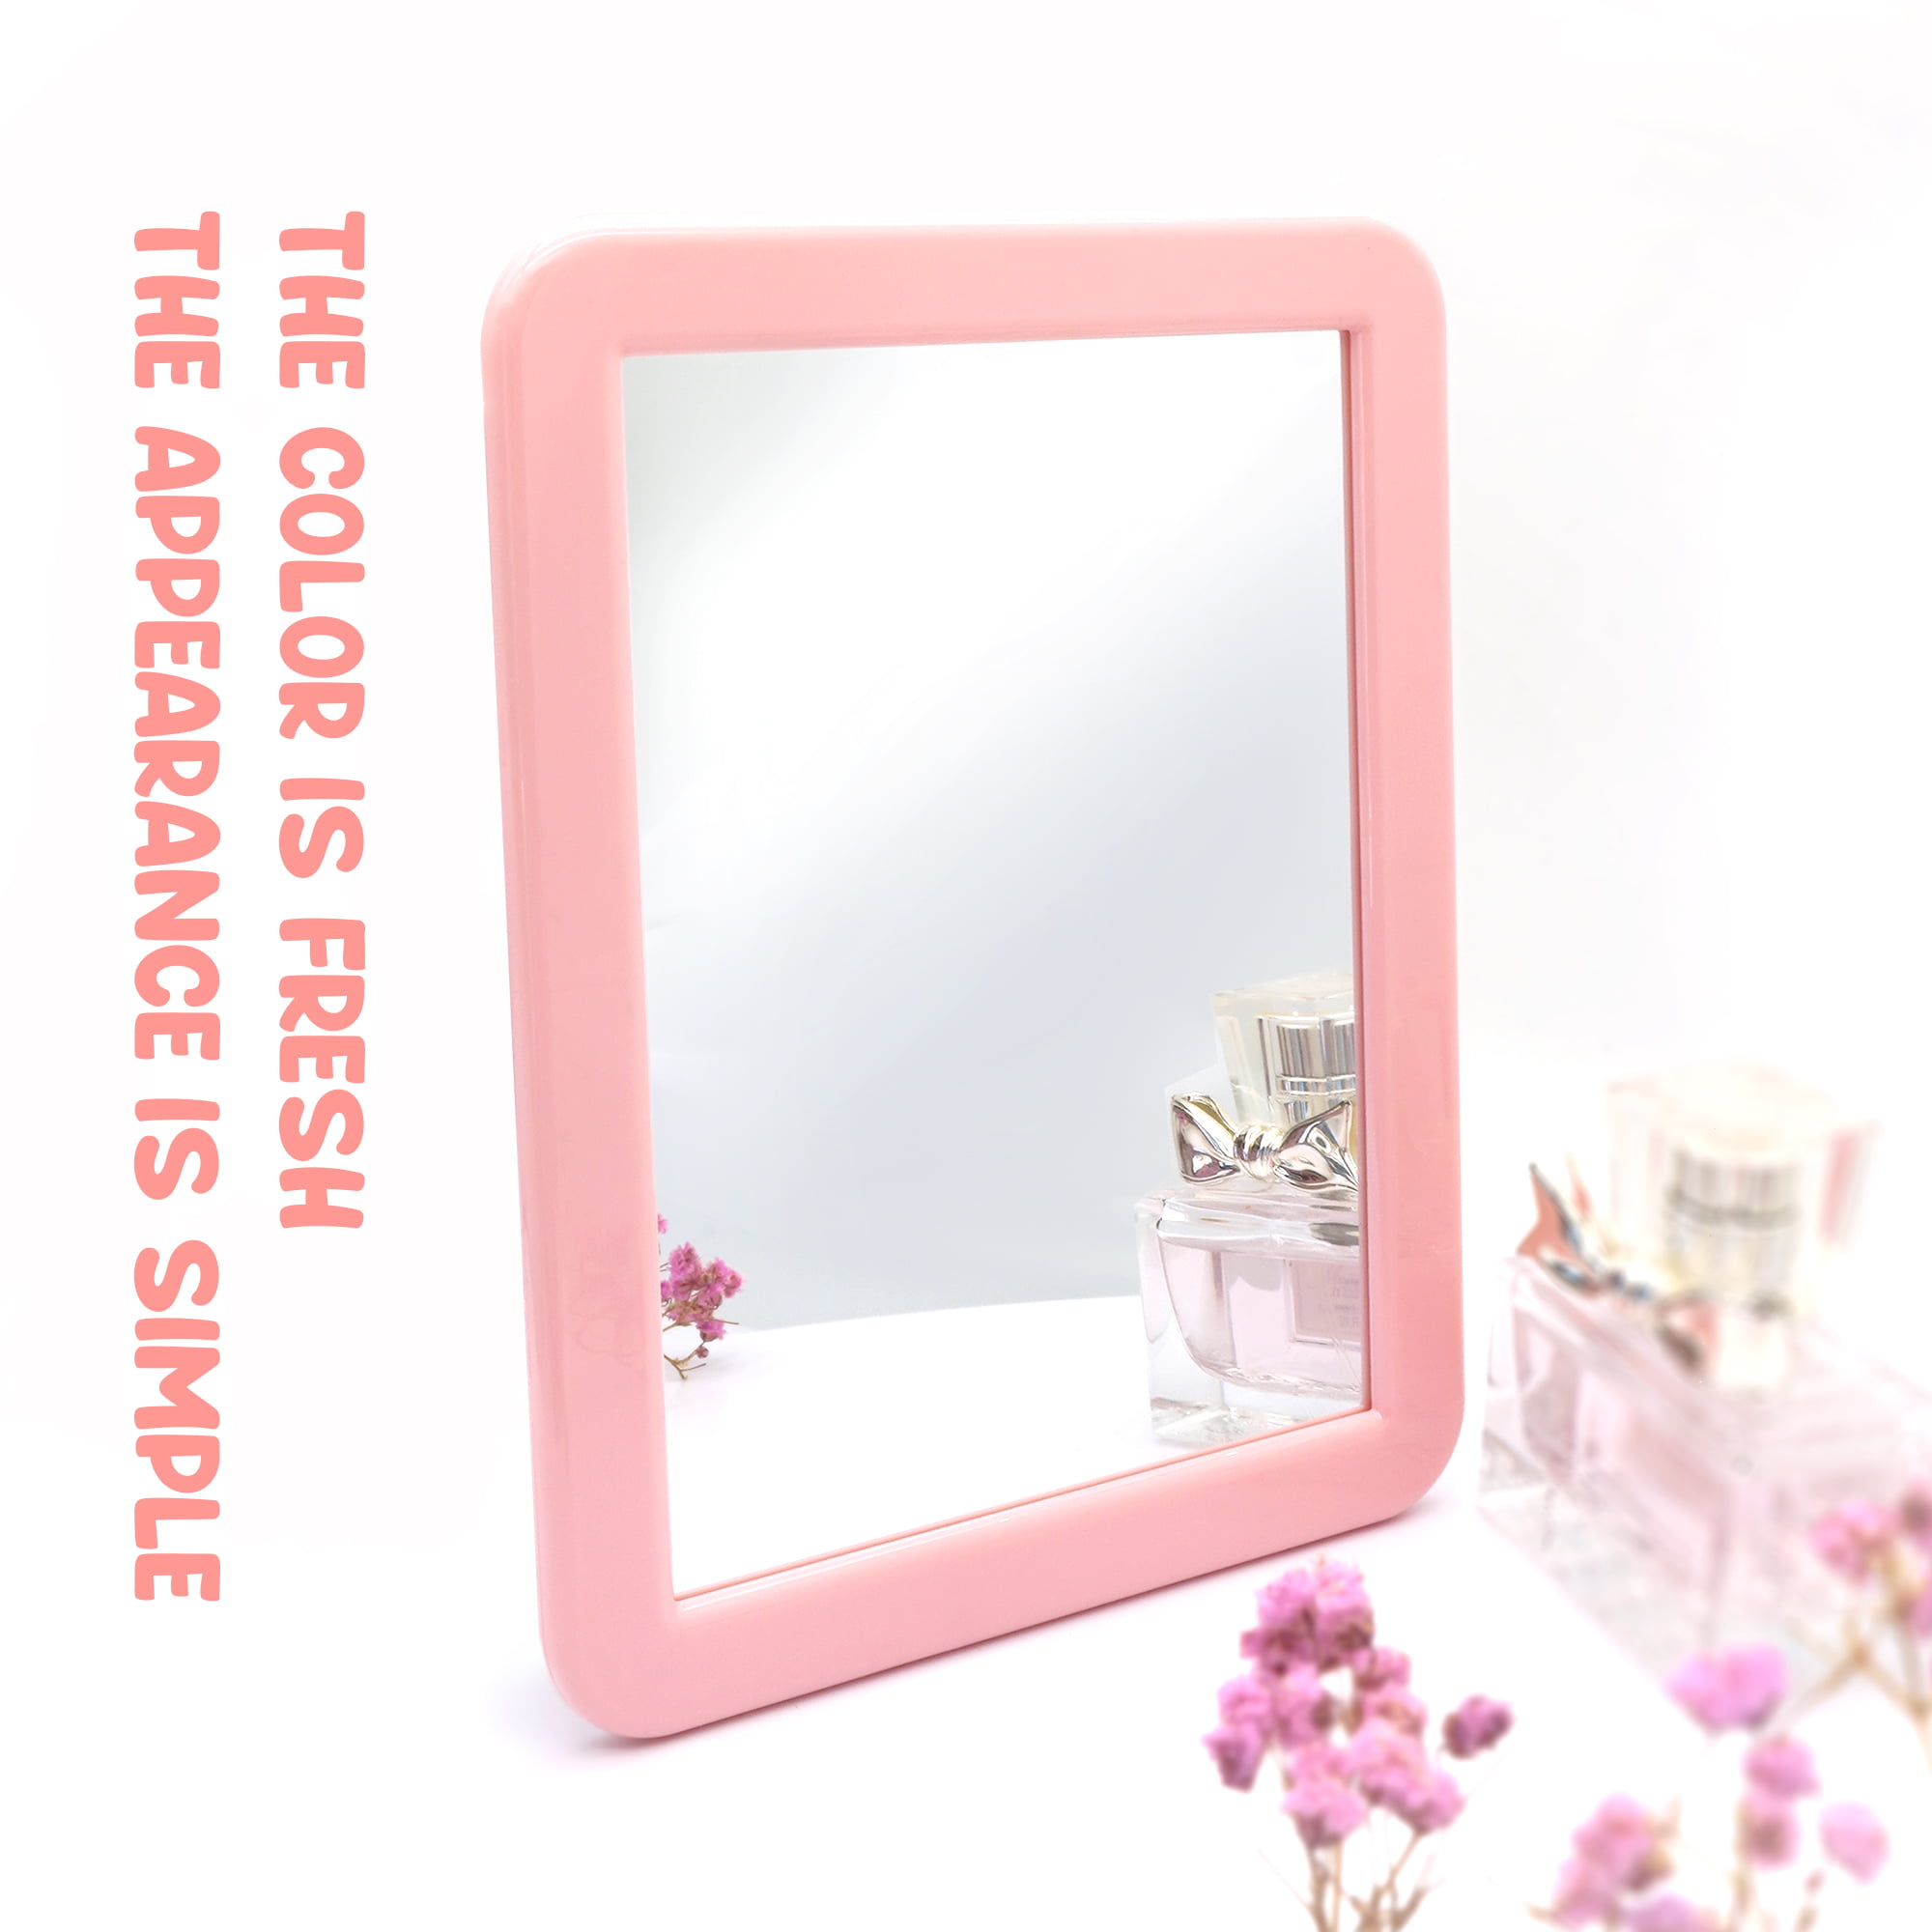 Five Star Locker Accessories, Magnetic Locker Mirror and Locker Light,  Bright Pink (38277)